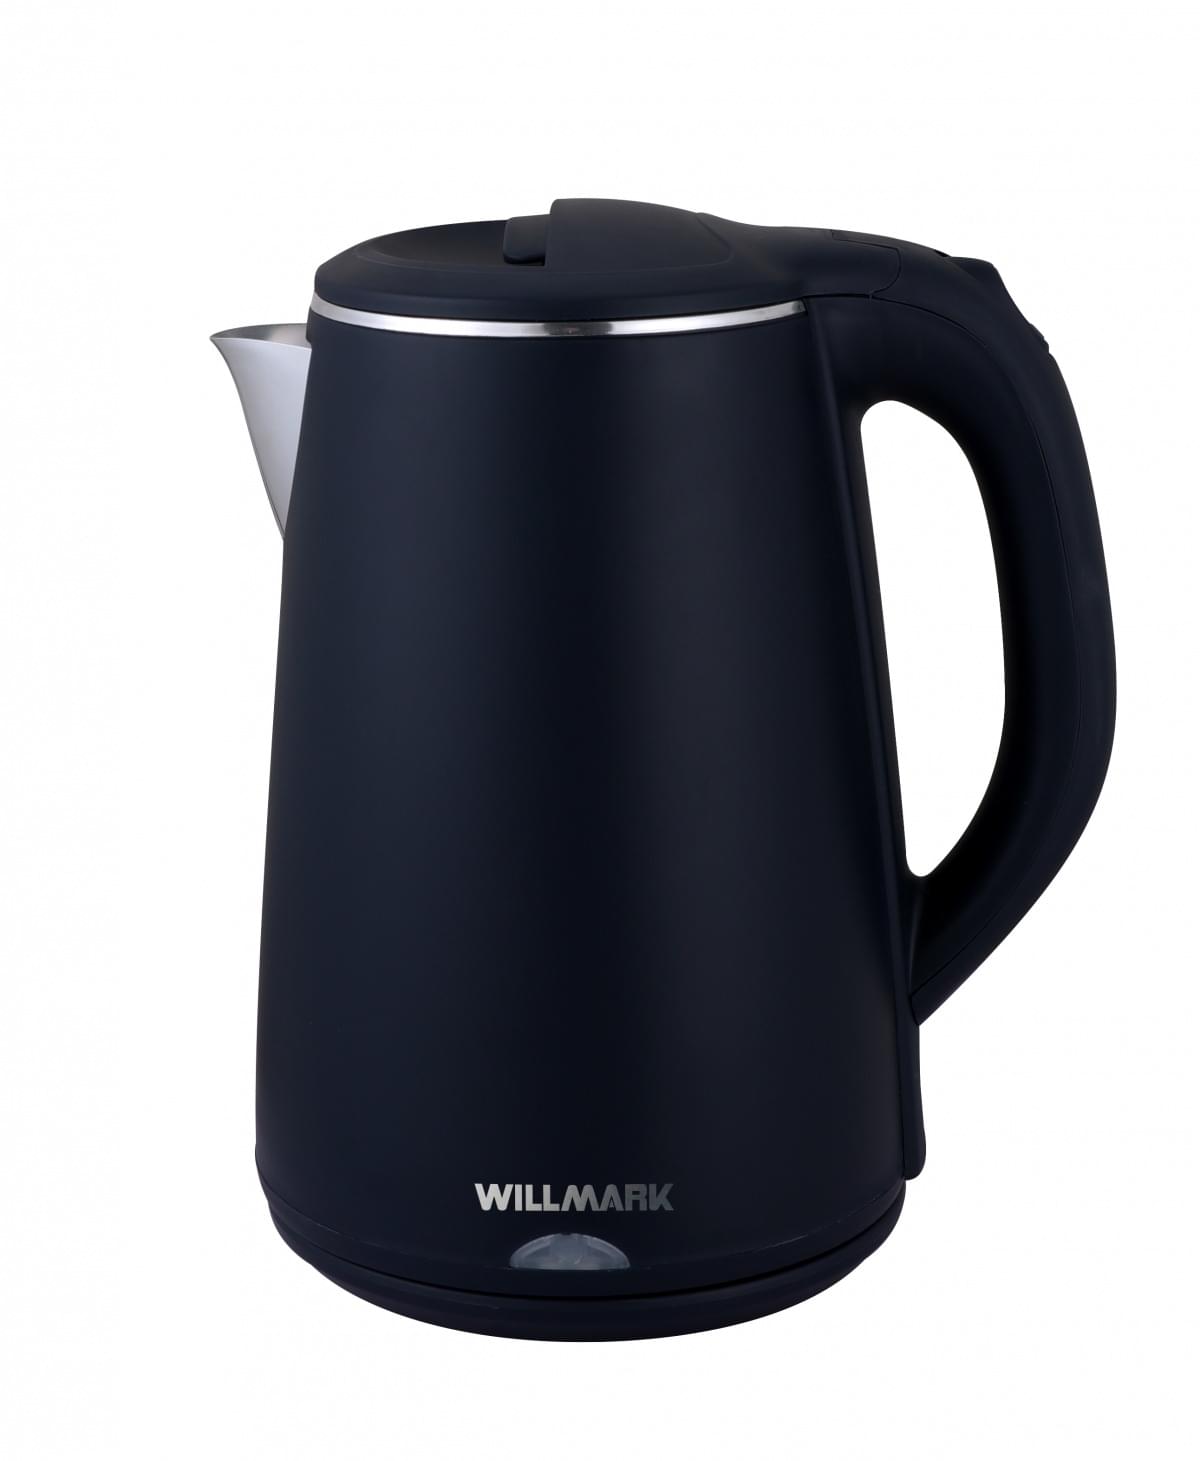 WILLMARK WEK 2002PS (чёрный)Чайник - уменьшенная 7